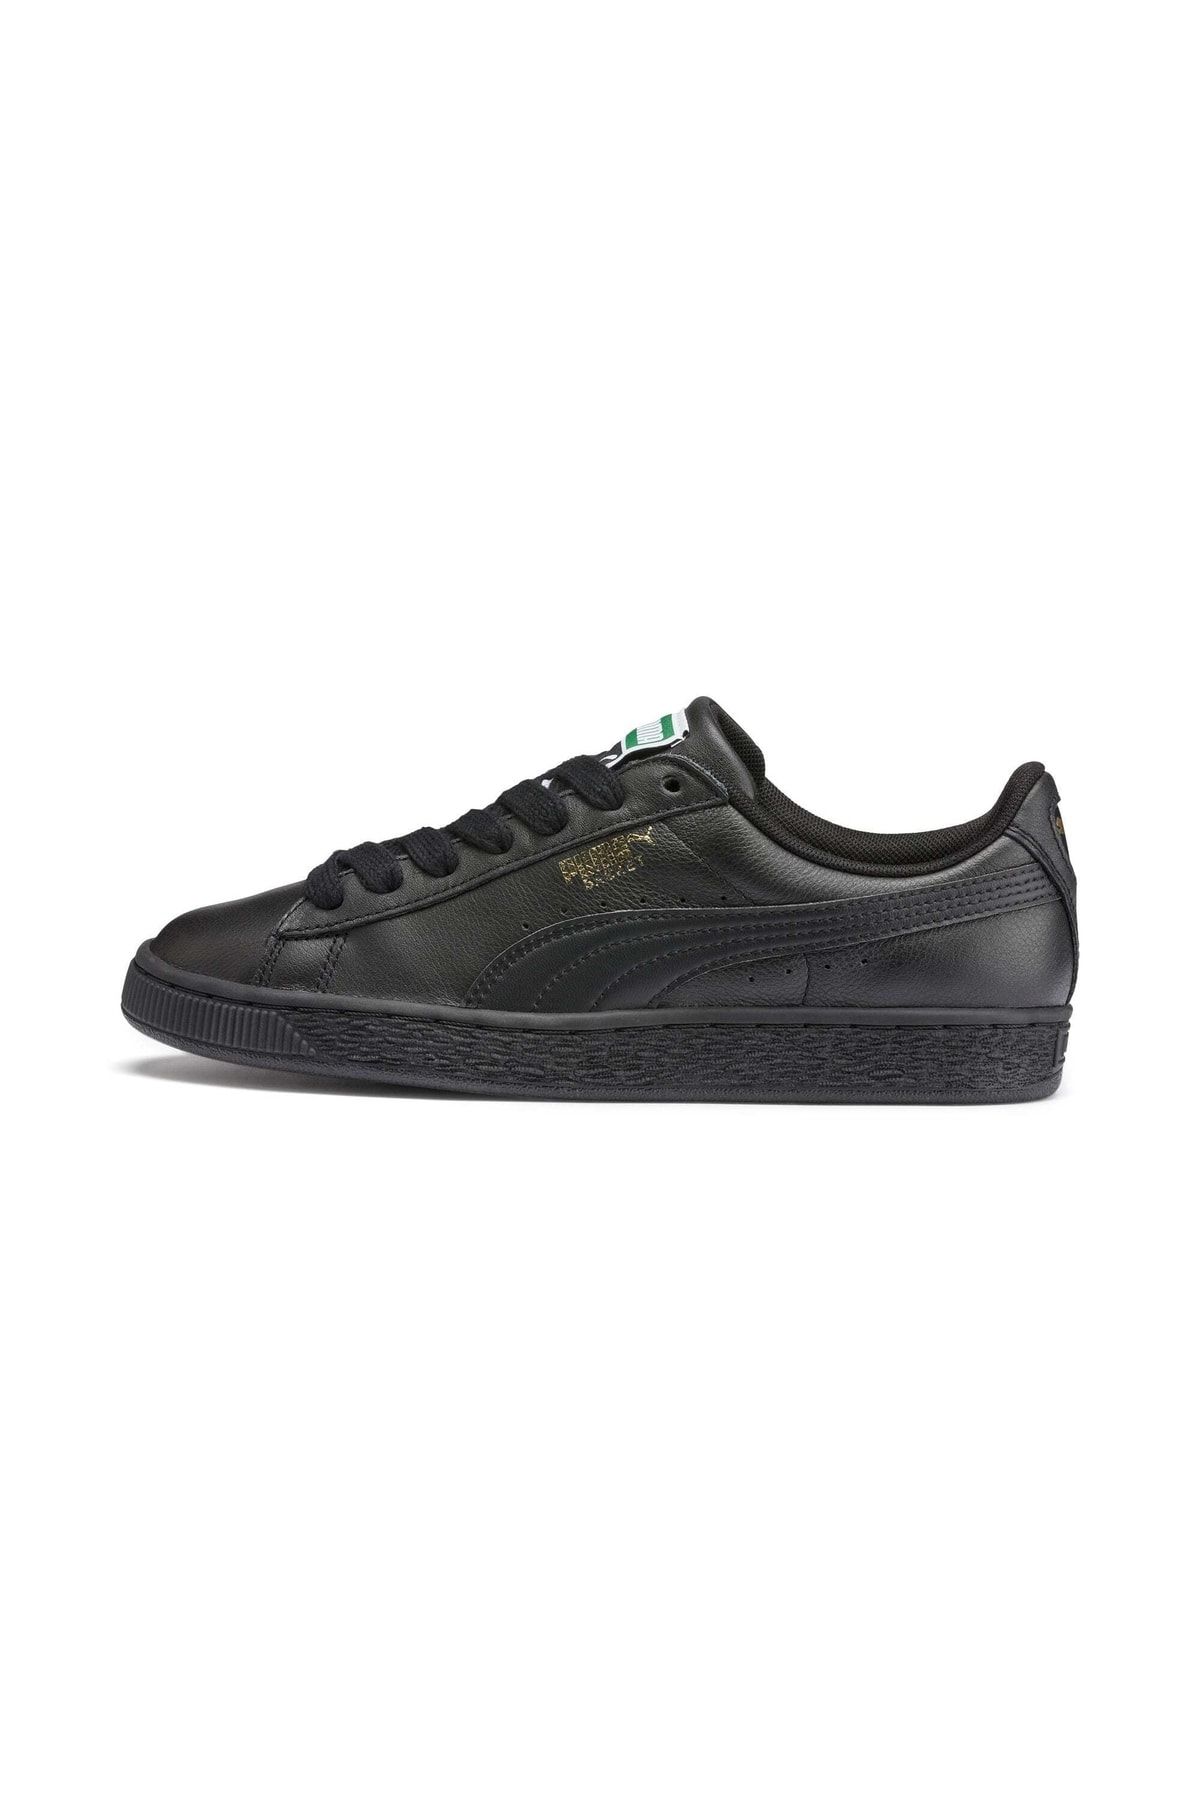 Puma BASKET CLASSIC LFS Siyah Erkek Sneaker Ayakkabı 100351431